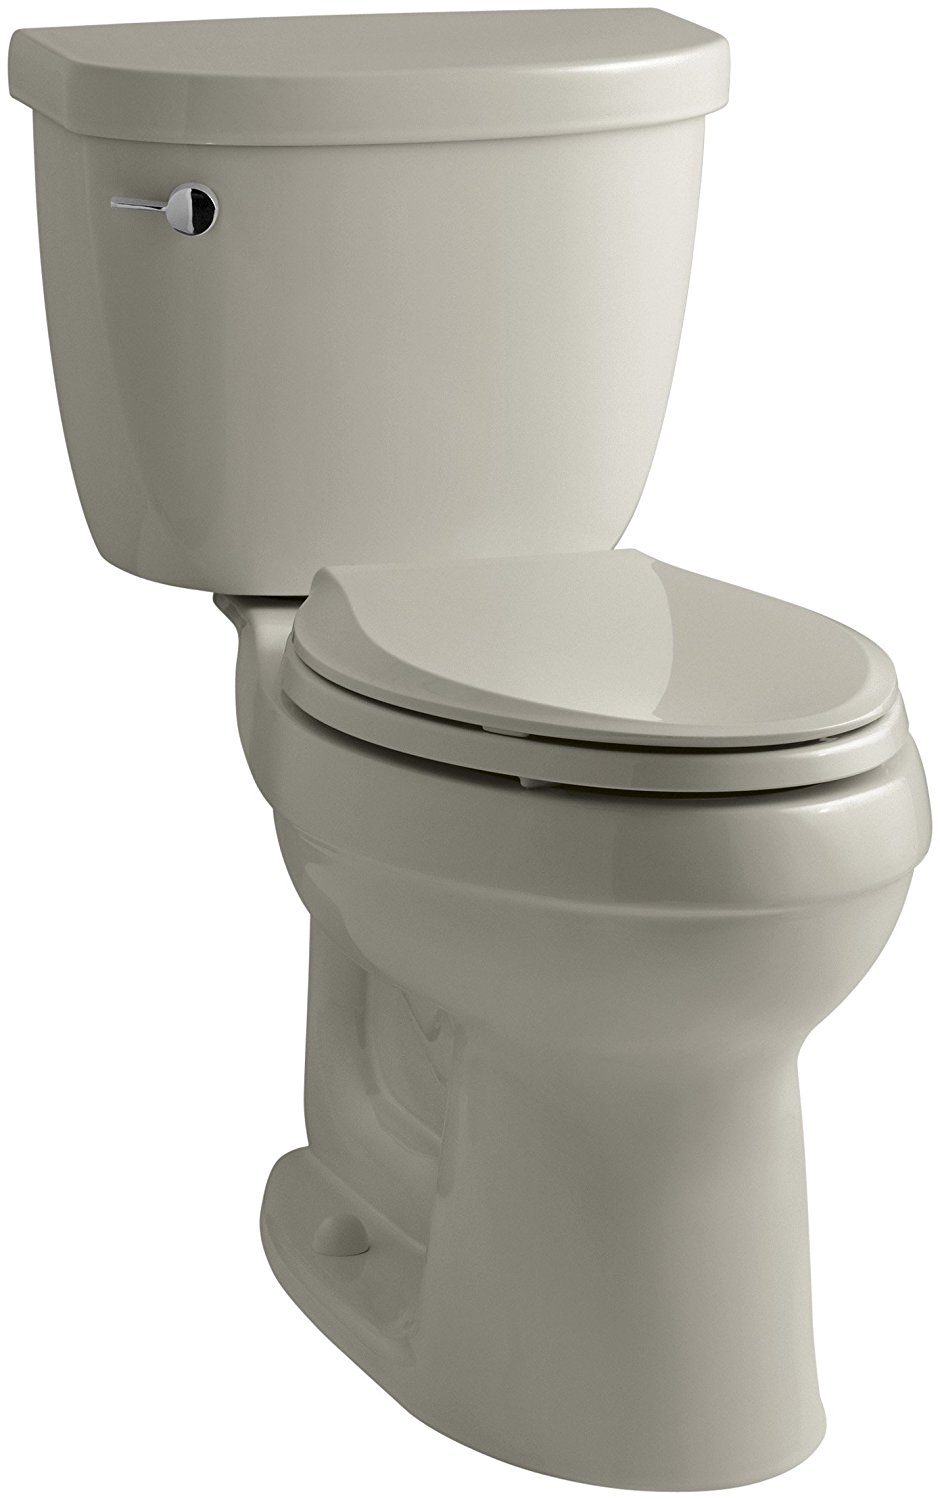 KOHLER K-3589-G9 Cimarron Comfort Height Elongated 1.6 gpf Toilet with AquaPiston Technology, Less Seat, Sandbar